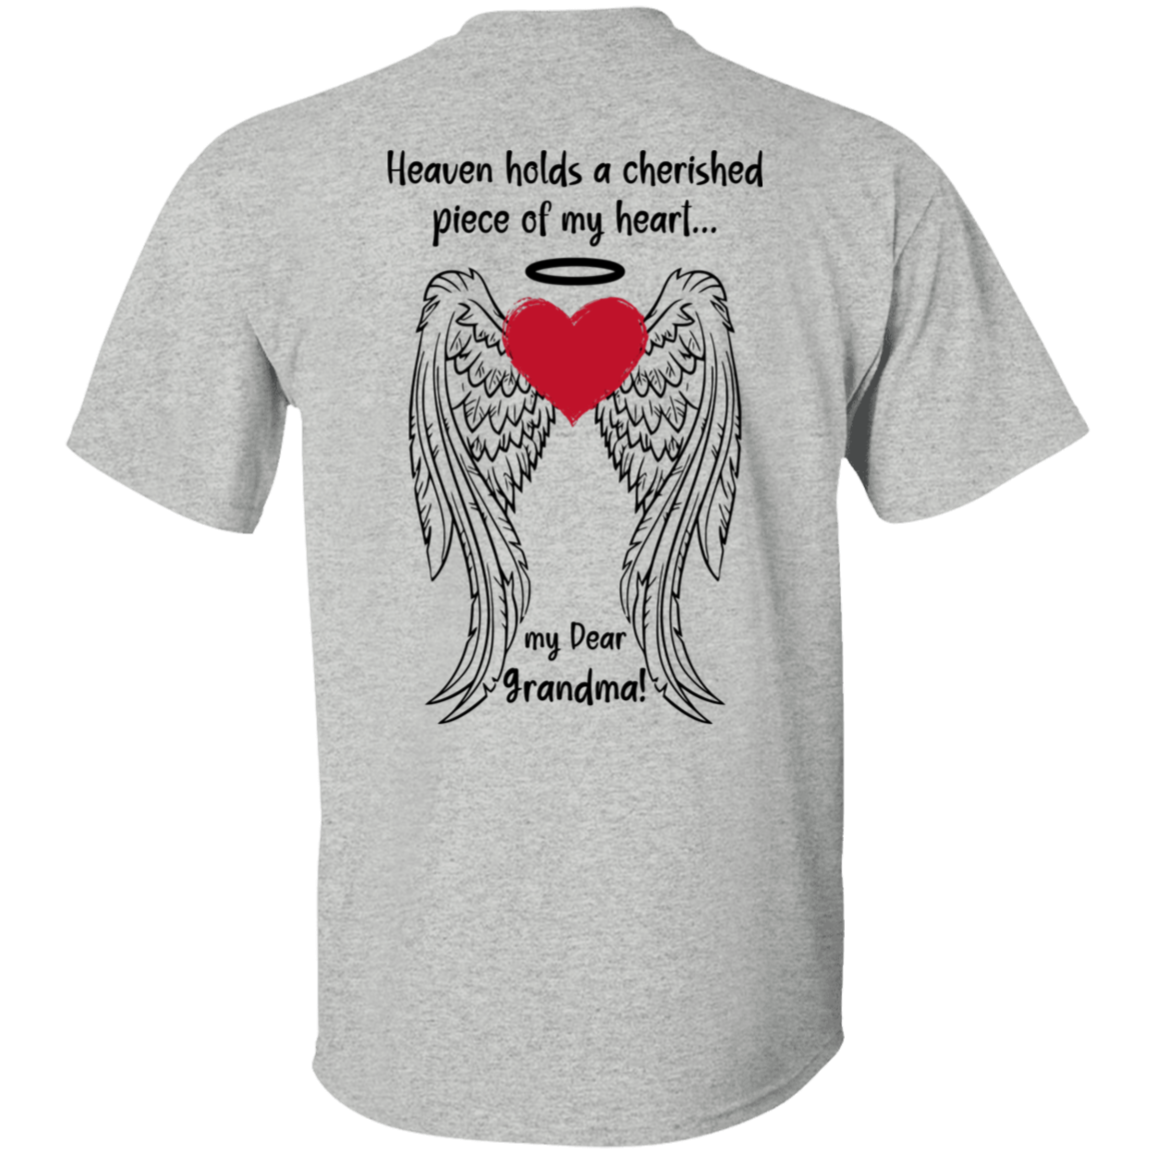 𝗚𝗥𝗔𝗡𝗗𝗠𝗔, HEAVENLY GUARDIAN - Unisex T-Shirt